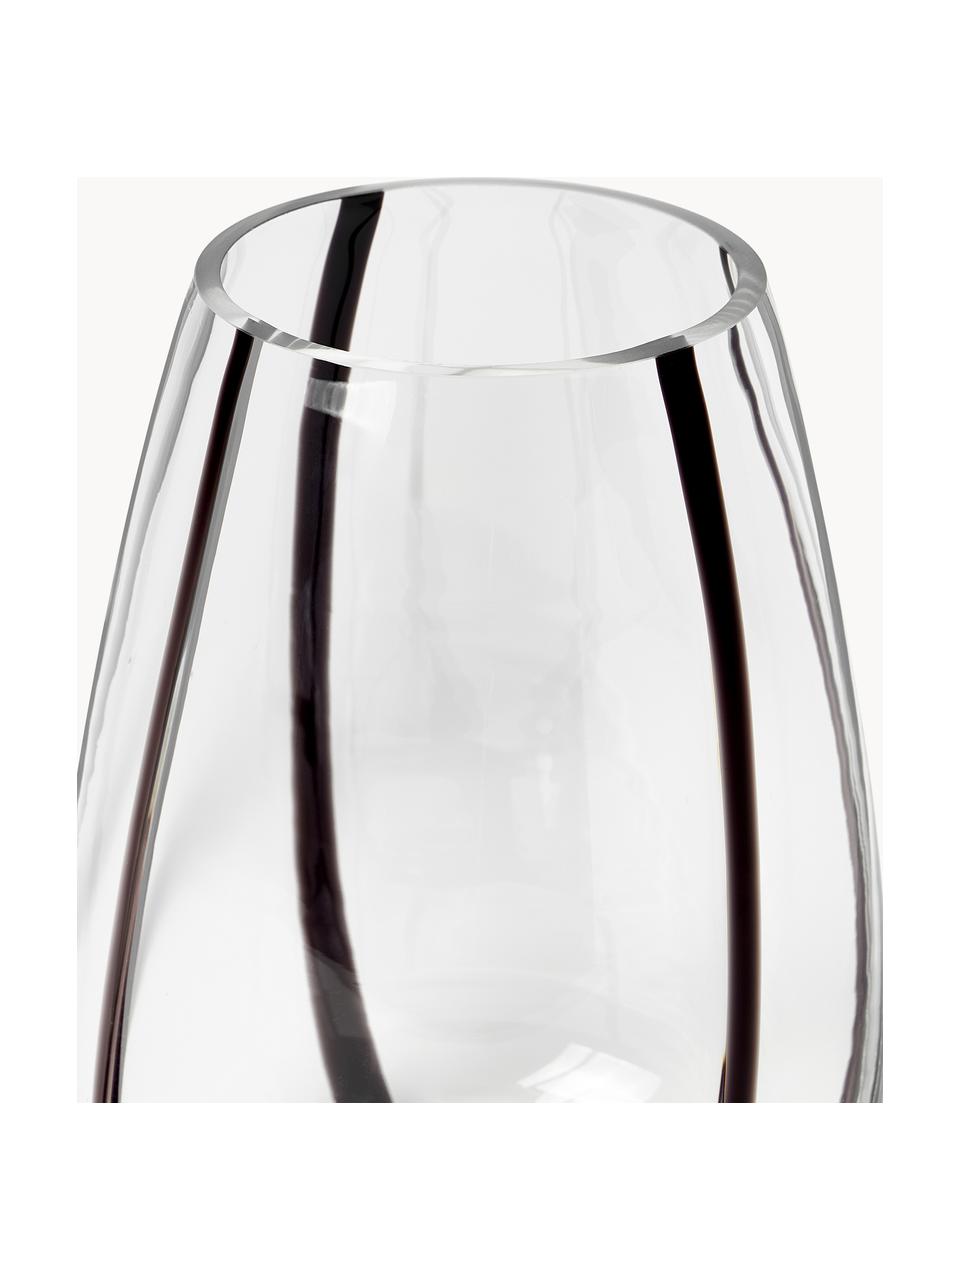 Glas-Vase Kira, H 26 cm, Kalknatronglas, Transparent, Schwarz, Ø 19 x H 26 cm